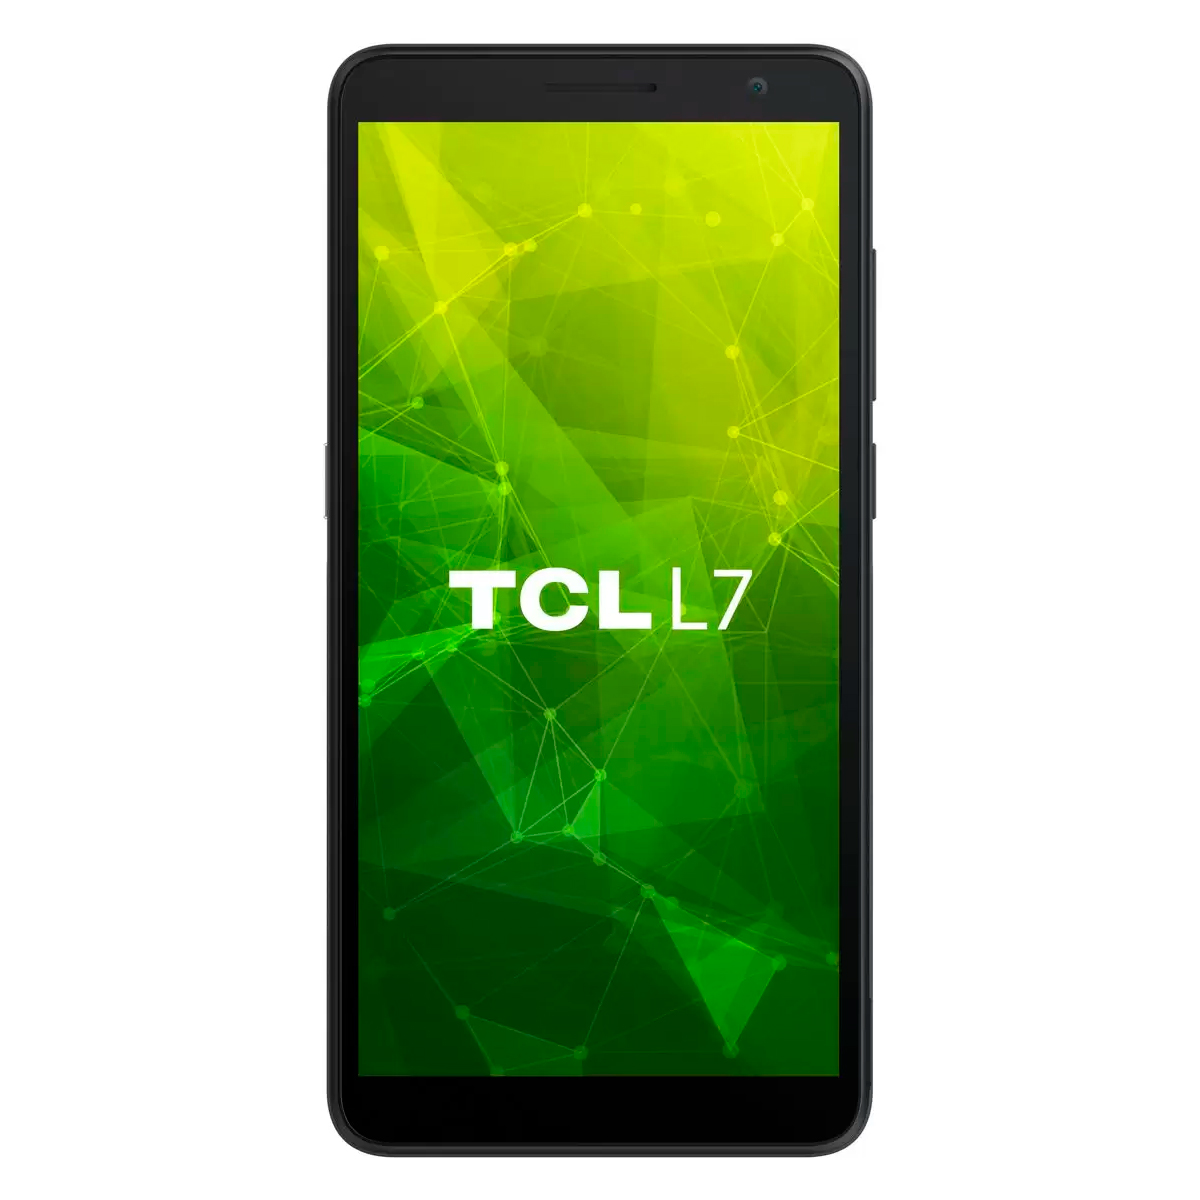 Smartphone TCL L7 - Tela 5.5